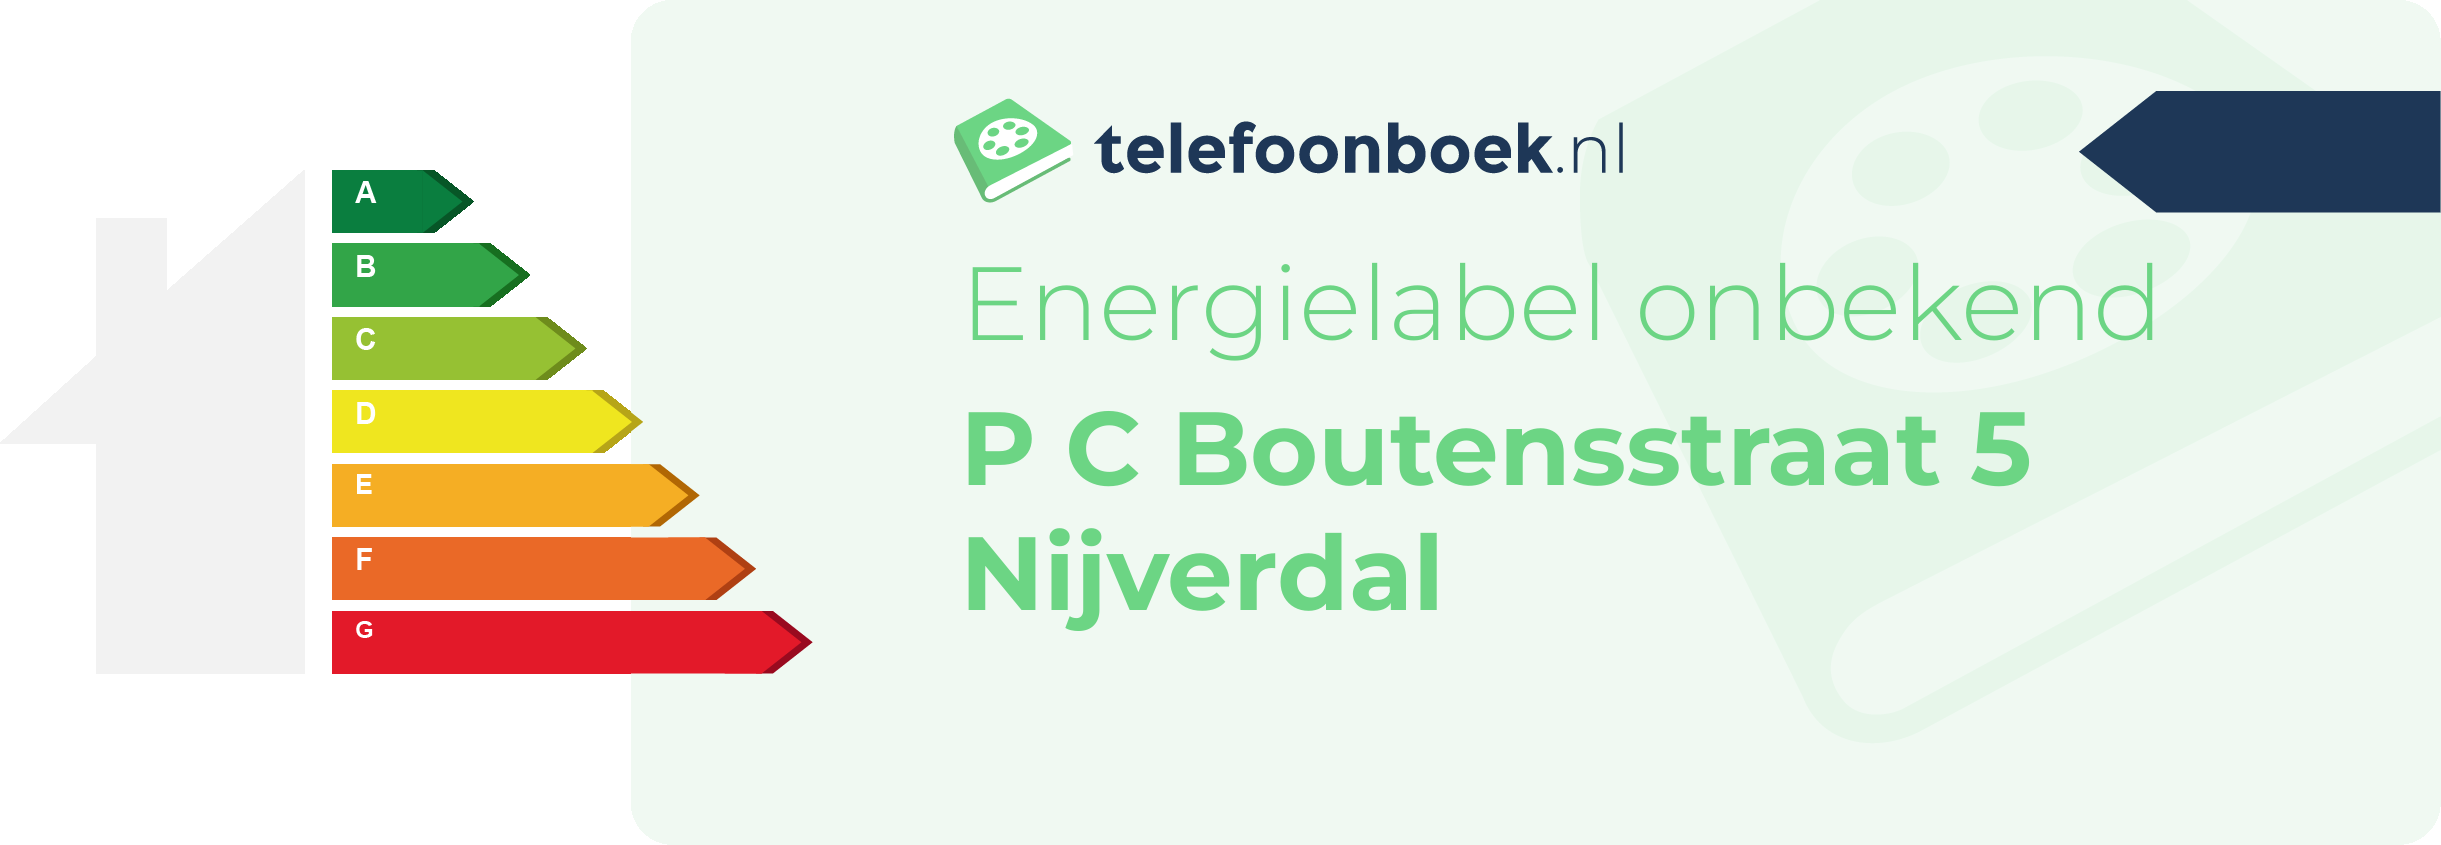 Energielabel P C Boutensstraat 5 Nijverdal